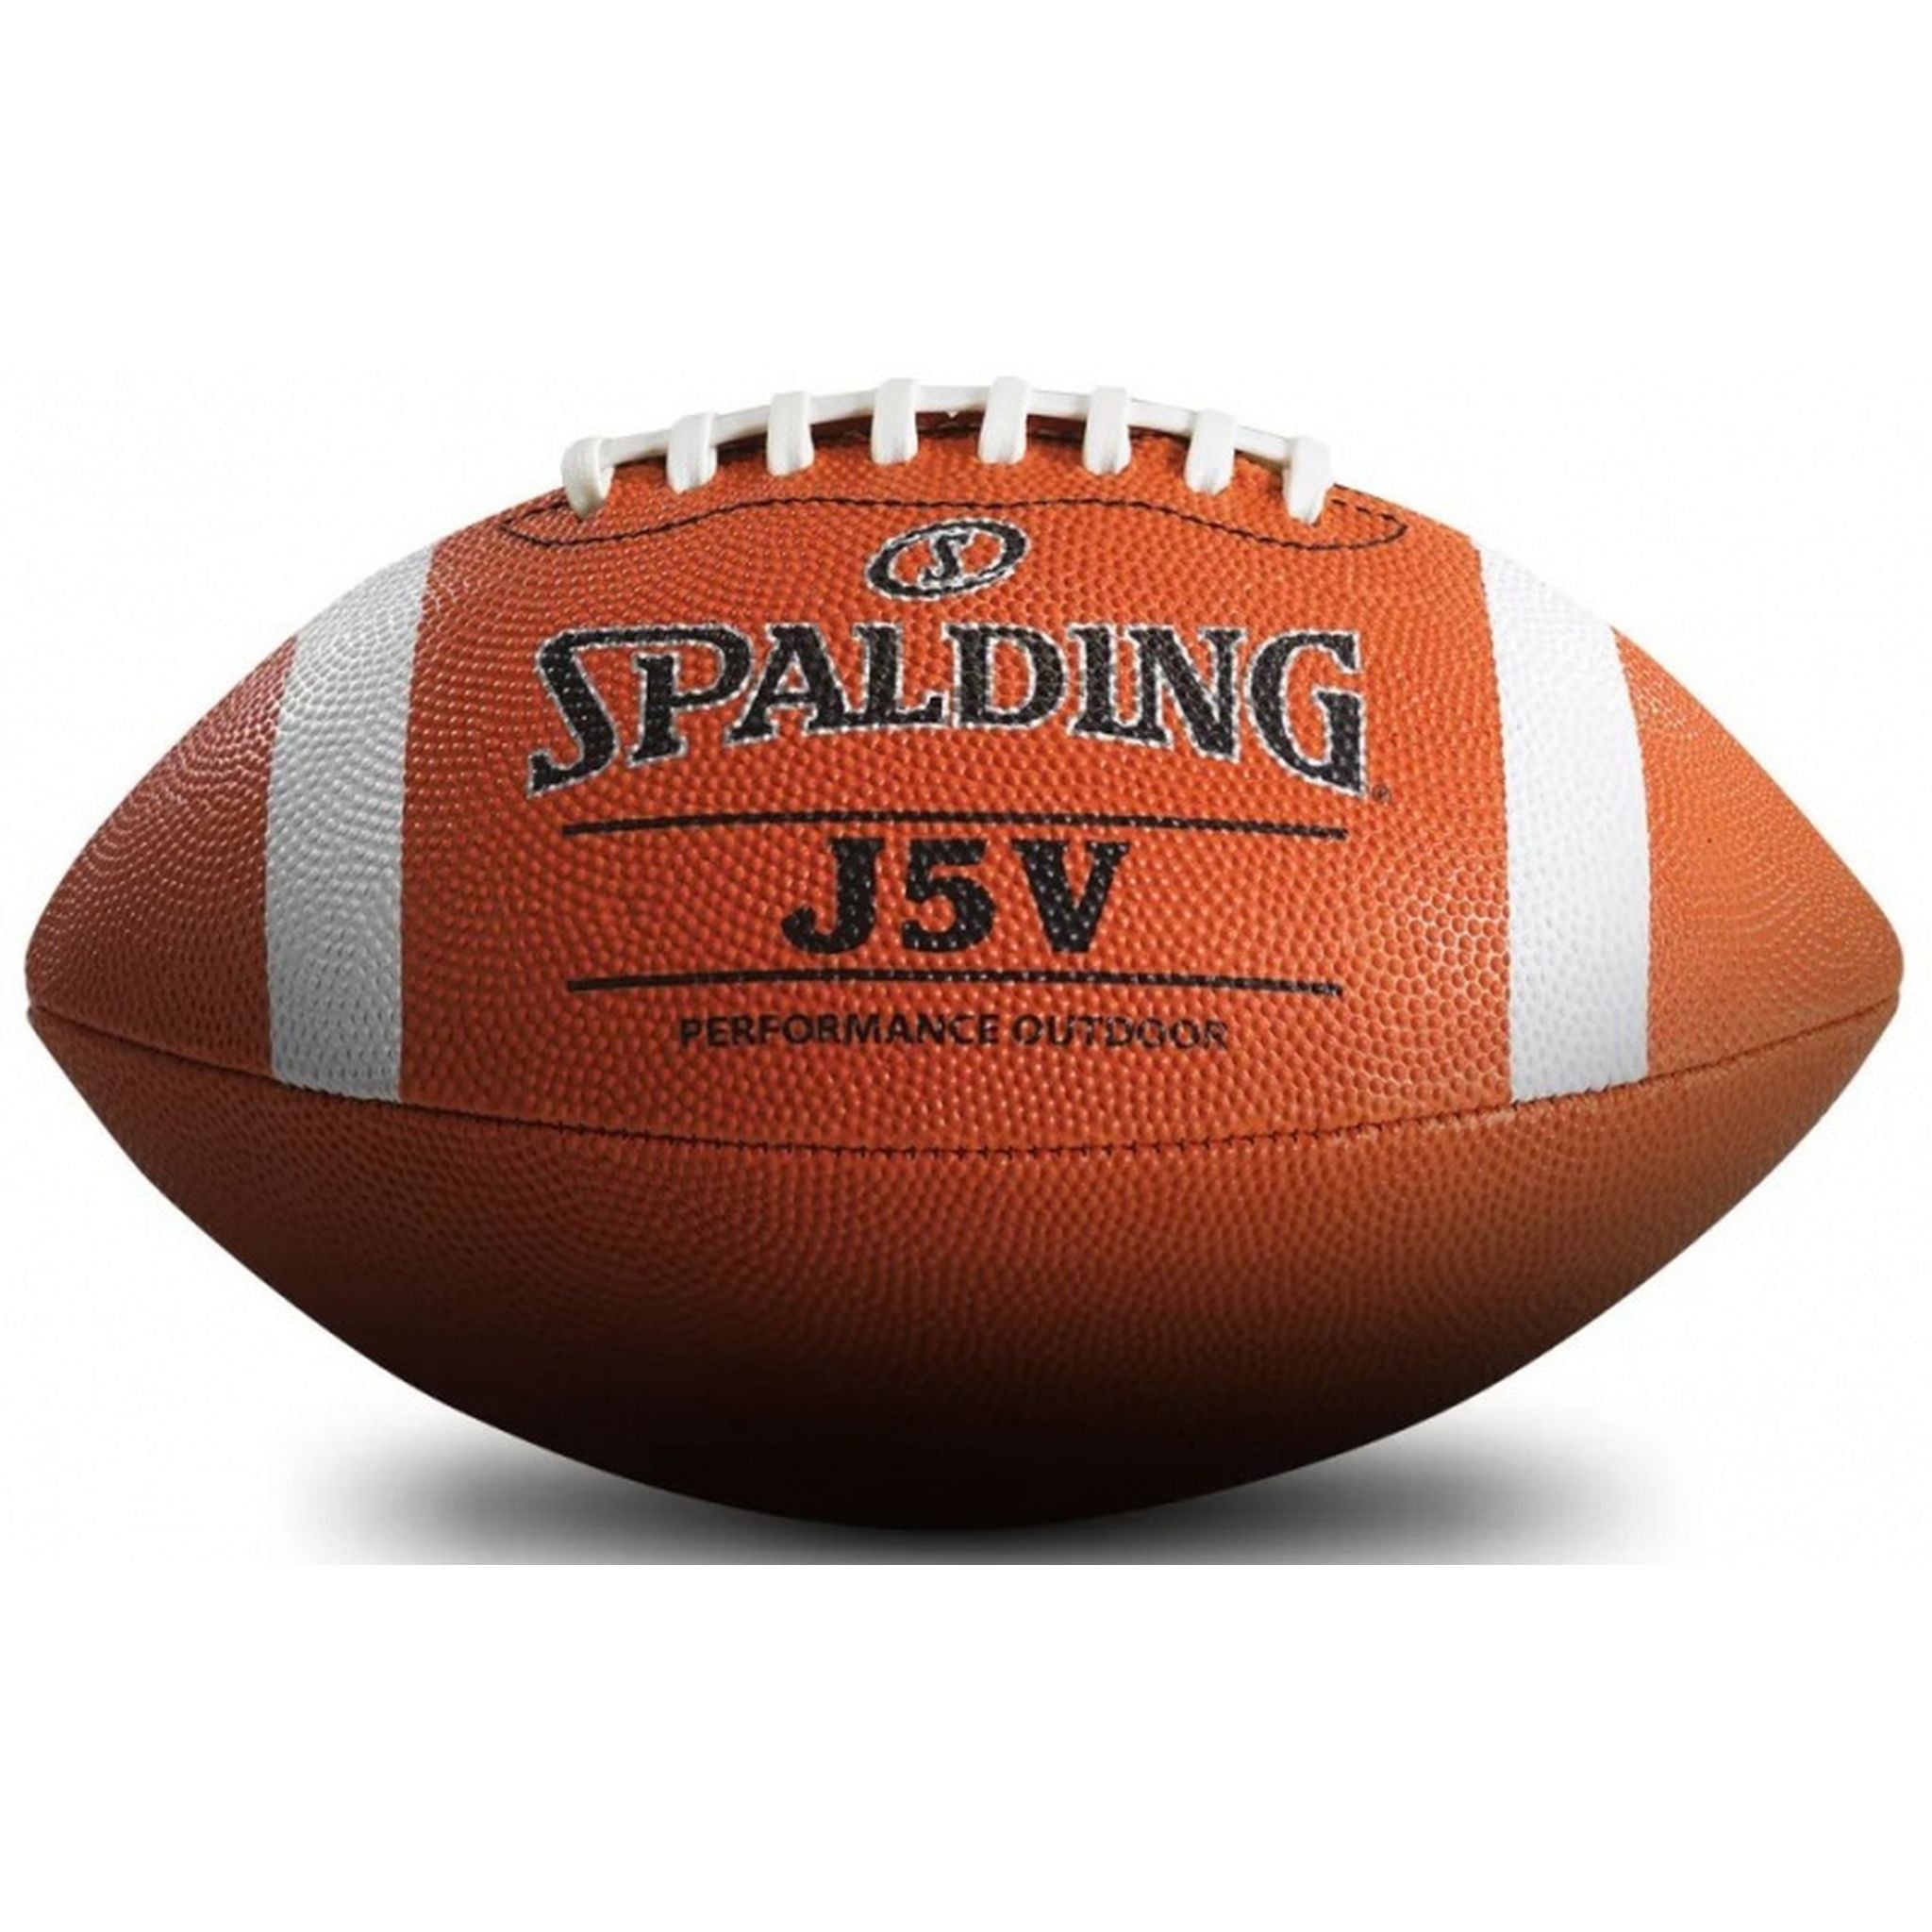 Spalding JV5 Advance Performance American Football